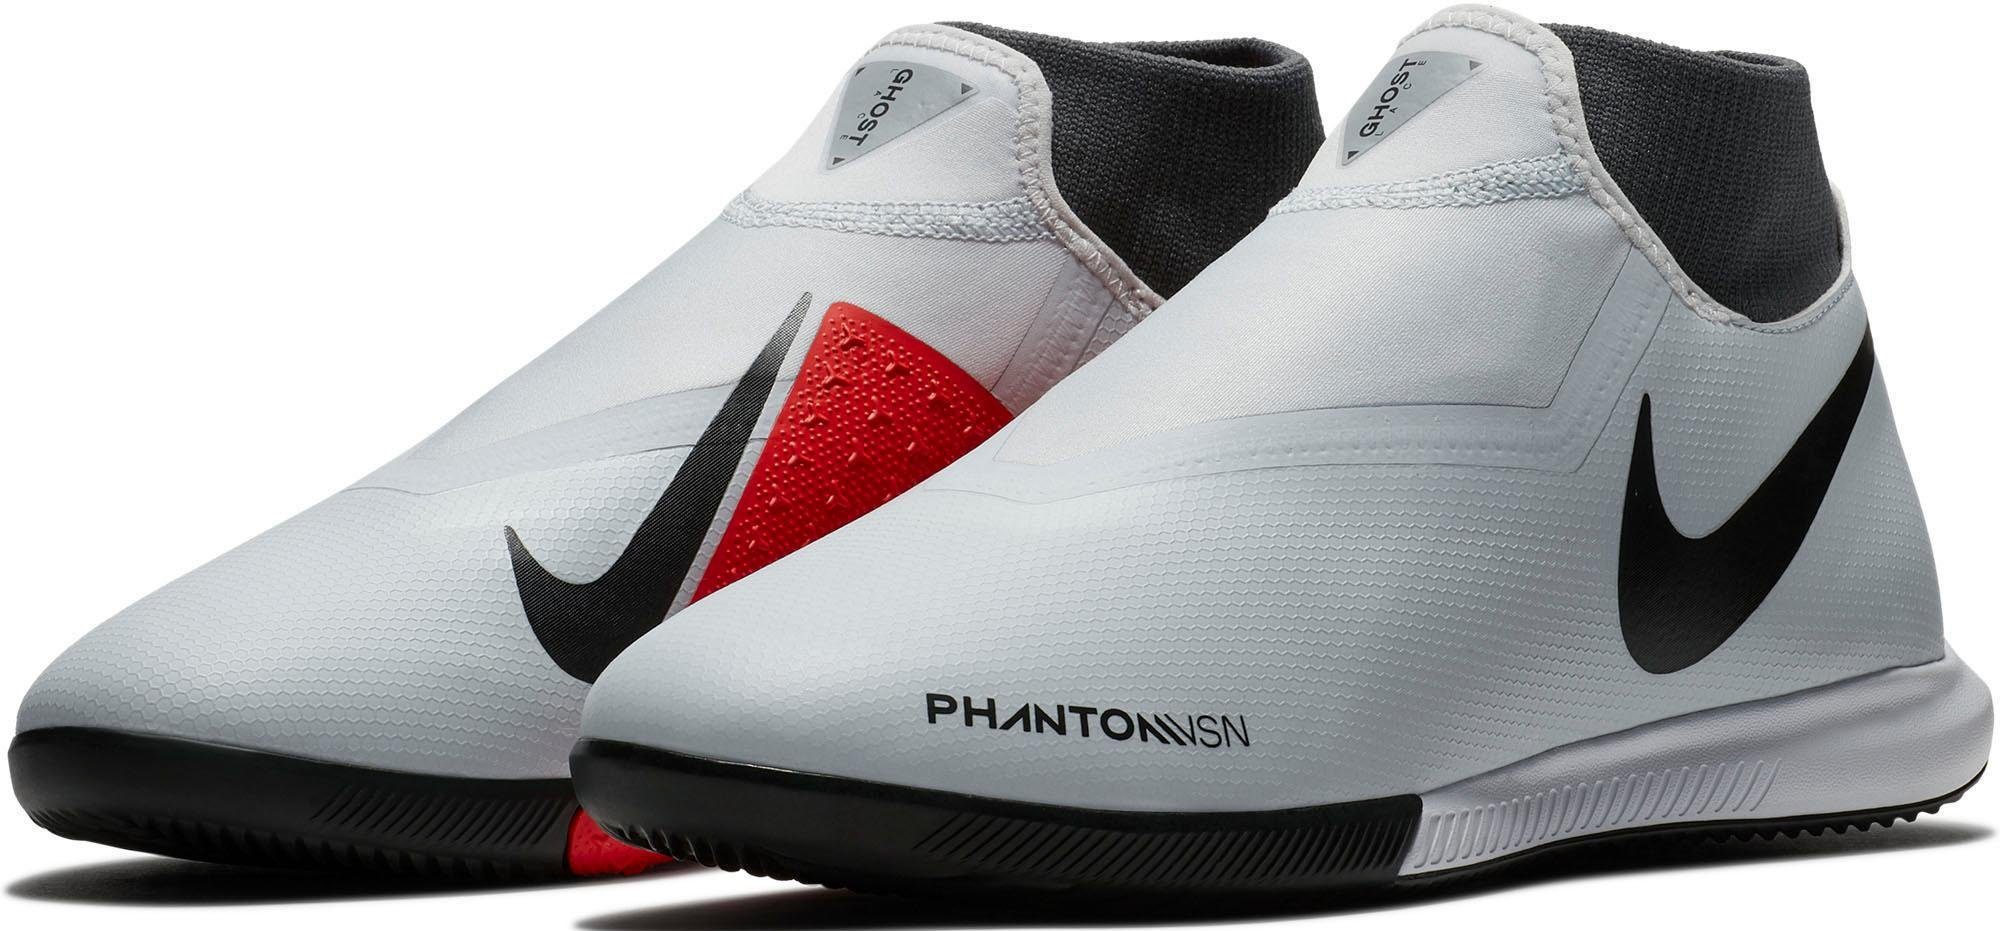 Nike Men's Phantom Venom Pro FG Soccer Cleat .com